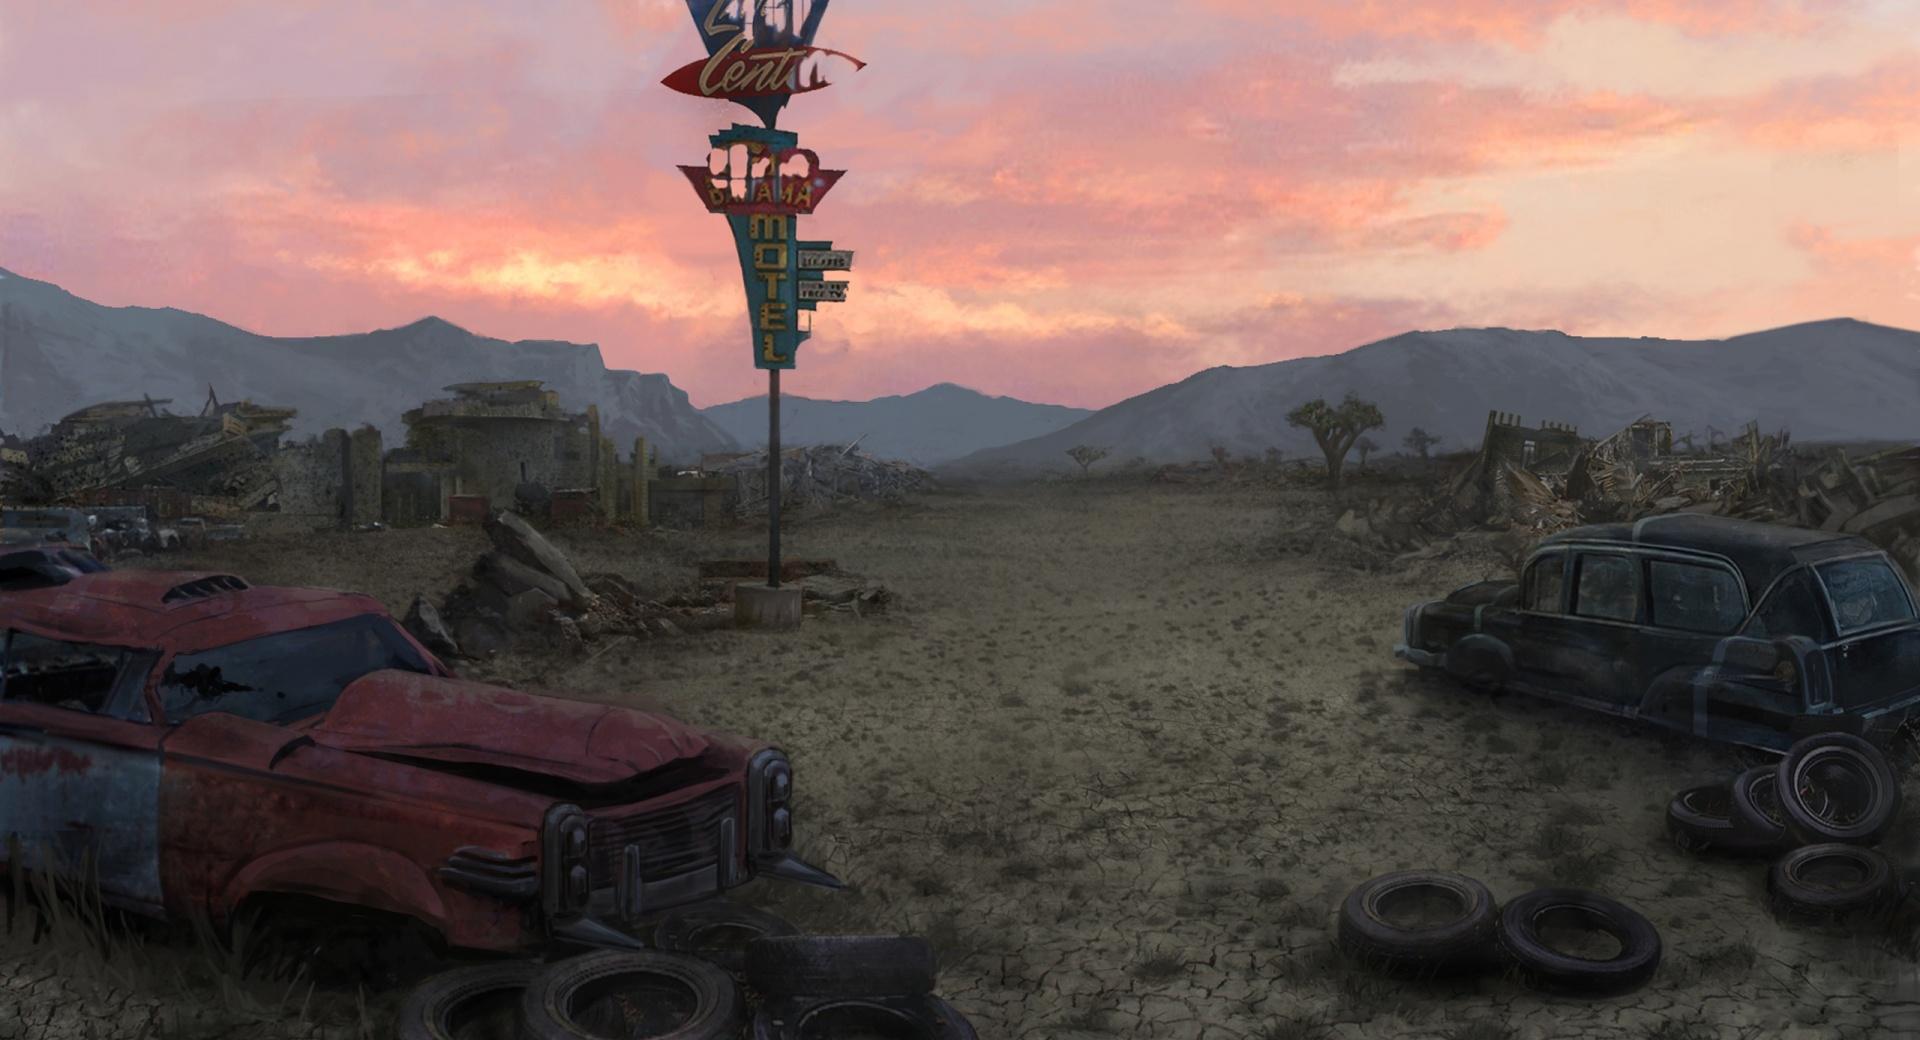 Fallout New Vegas Concept Art - Junkyard at 1280 x 960 size wallpapers HD quality